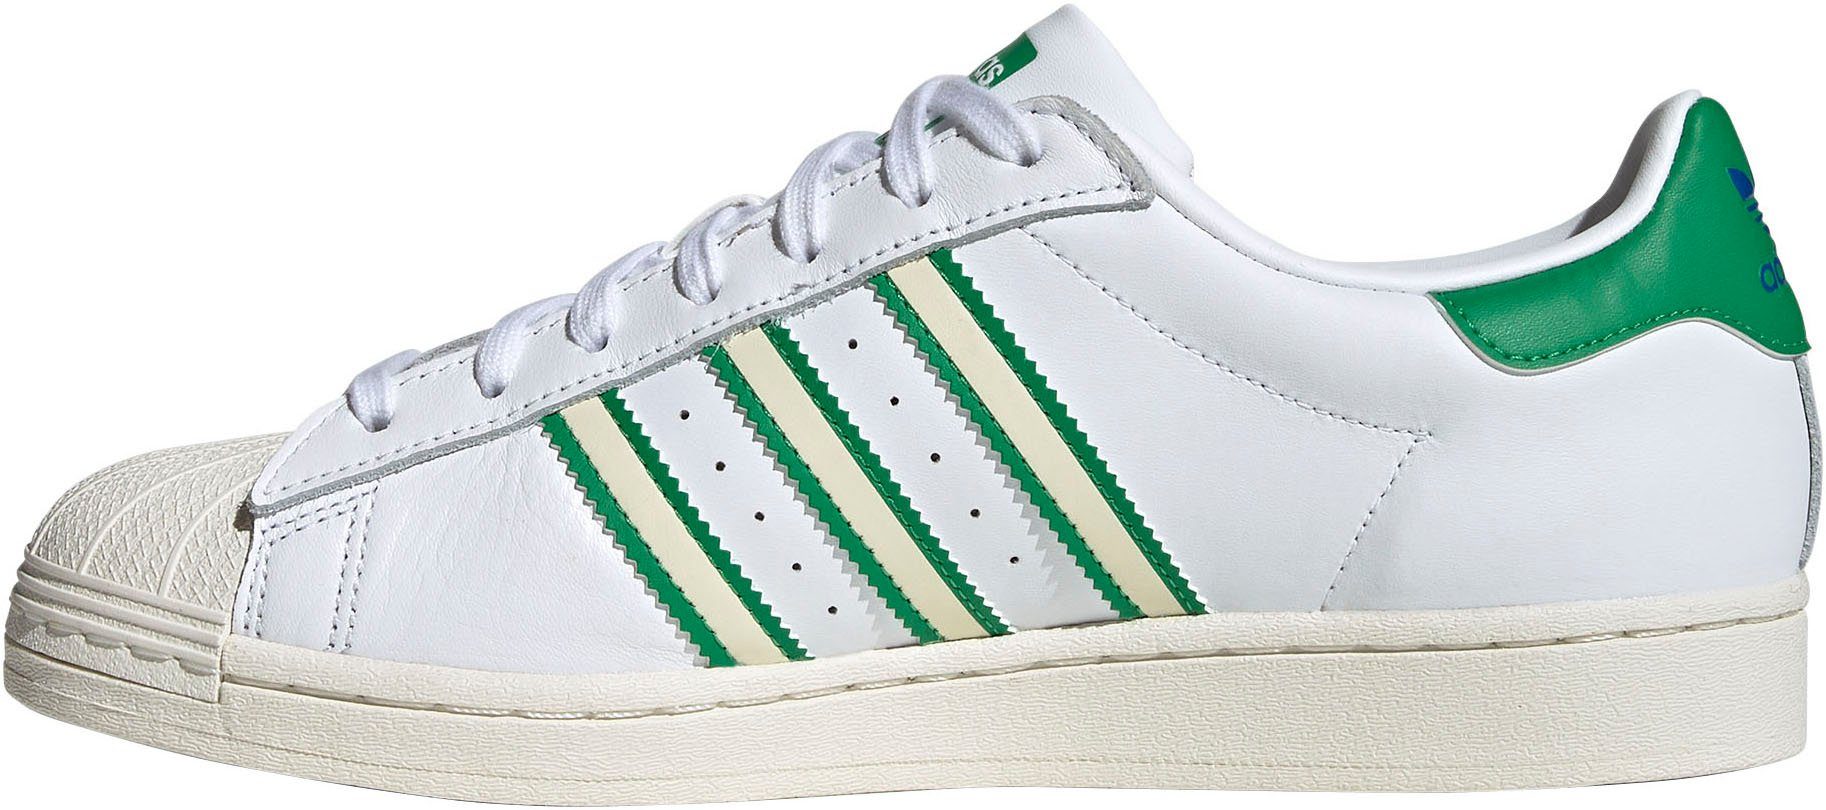 adidas weiß-grün SUPERSTAR Originals Sneaker